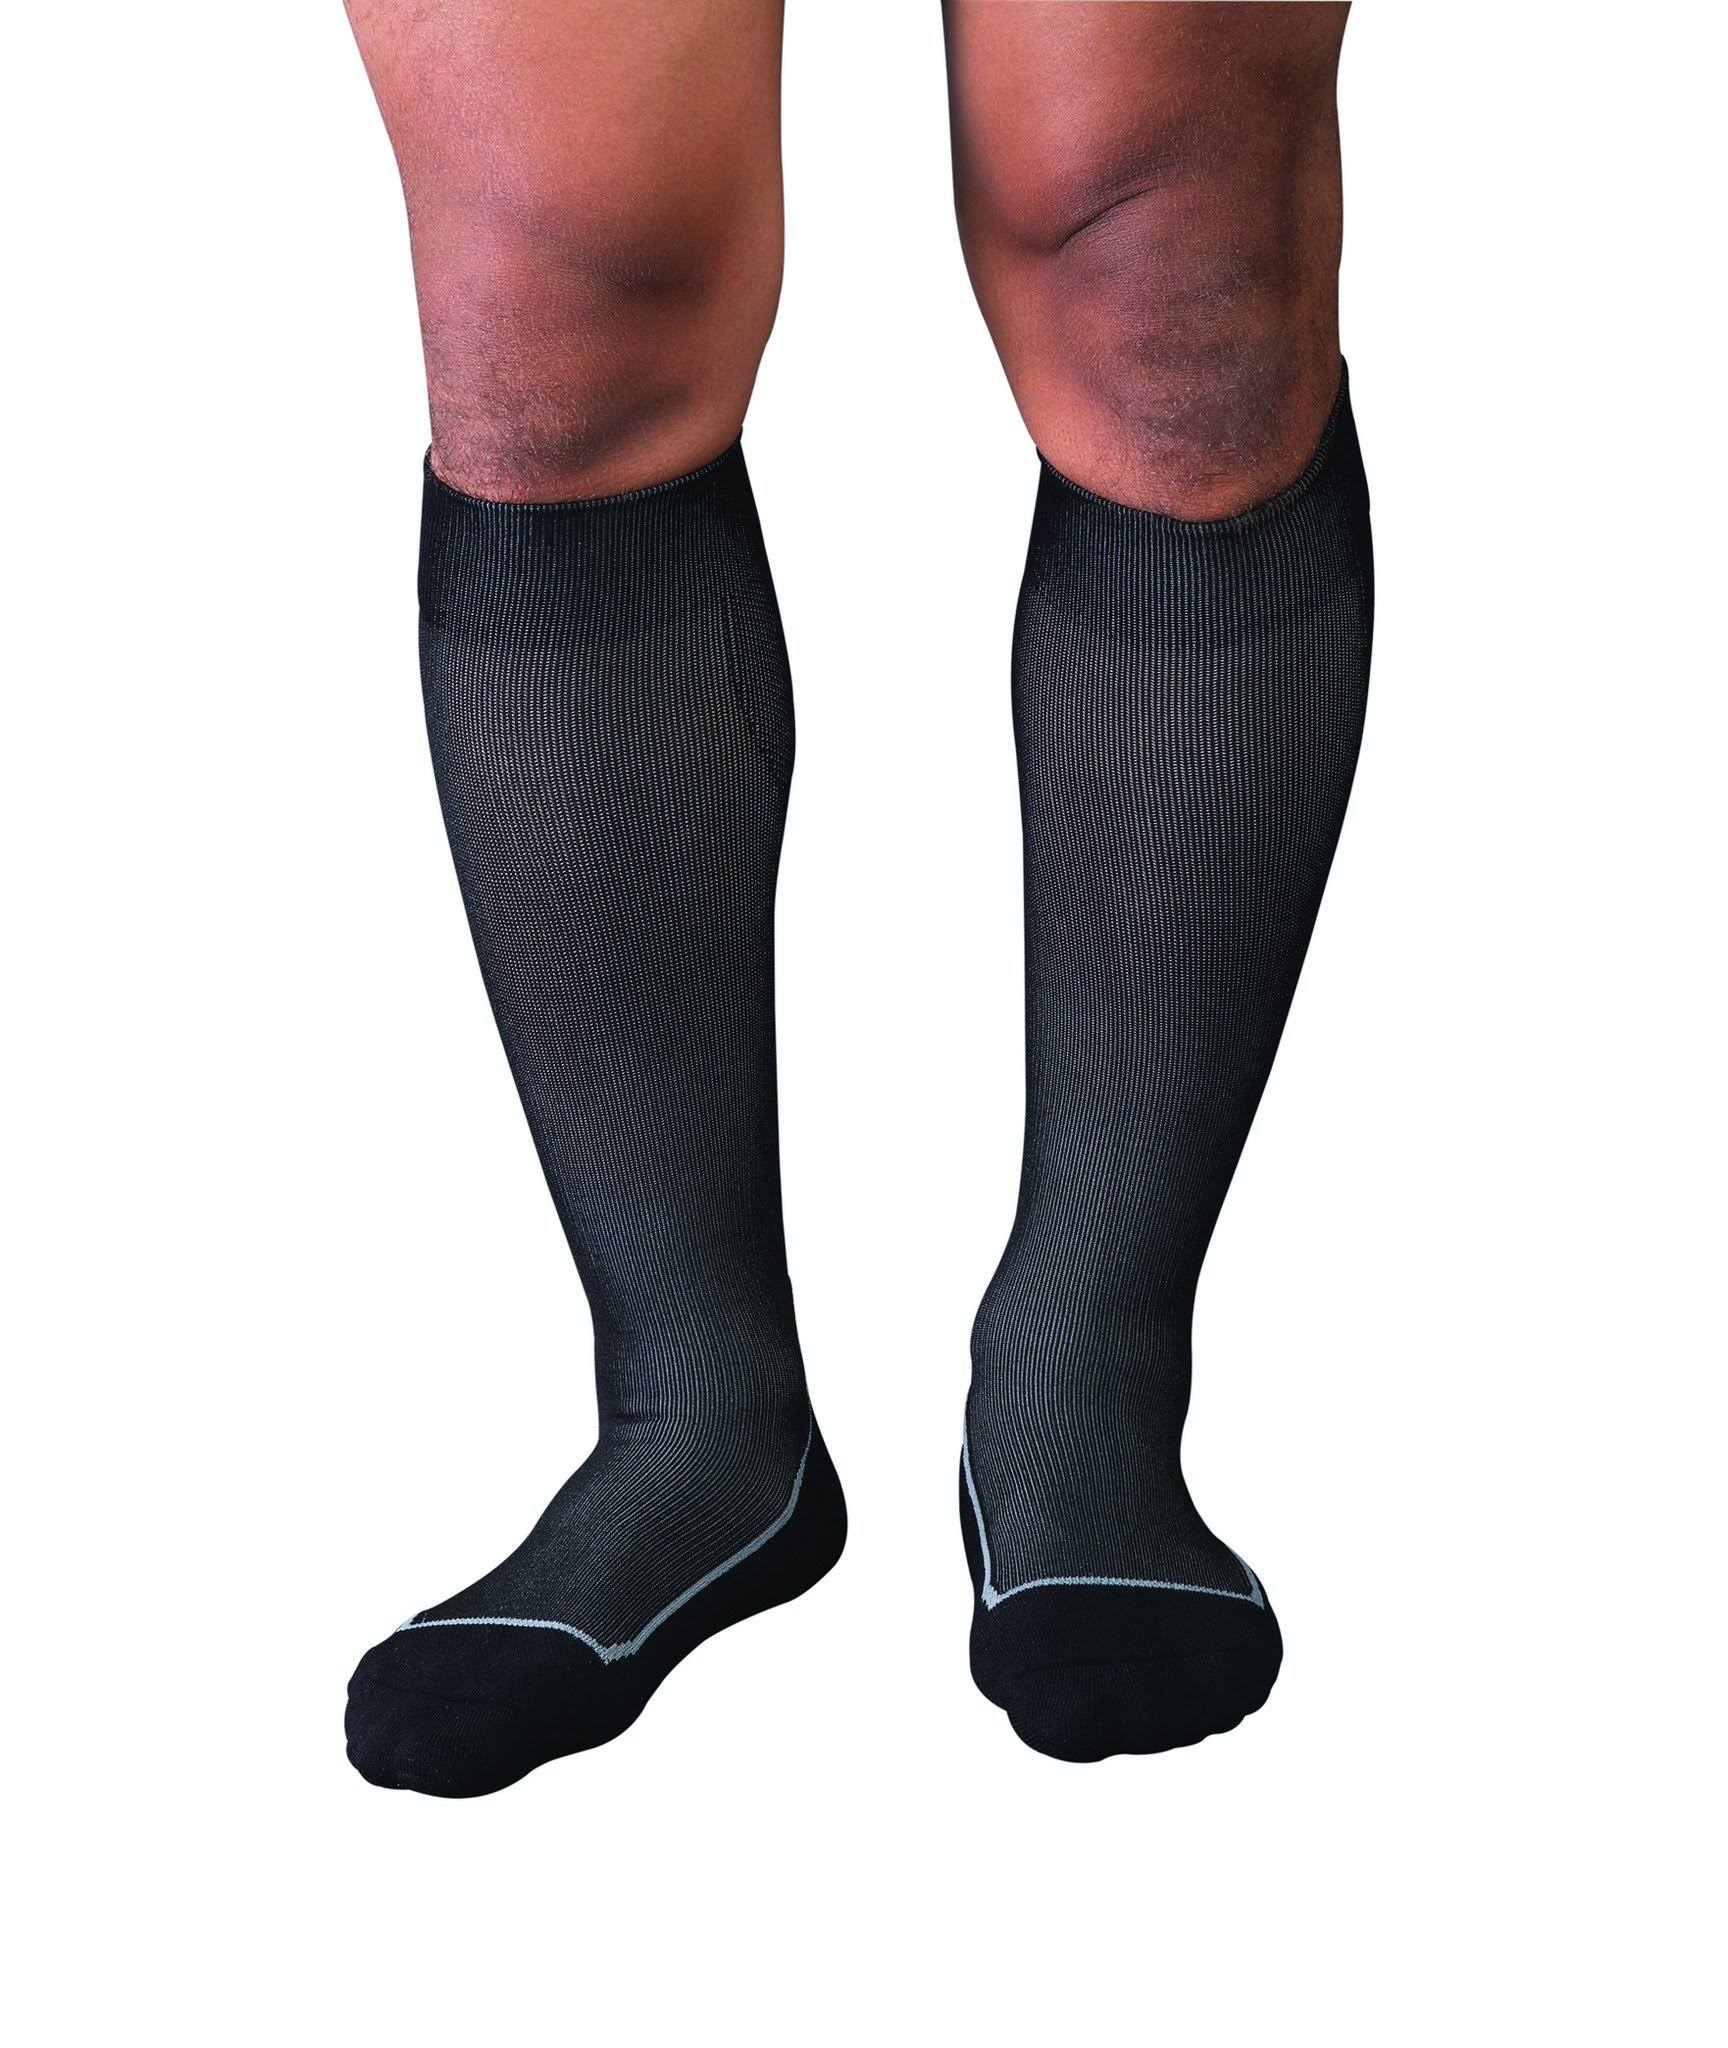 Jobst Sport 20-30 mmHg Knee High Socks / Large / Cool Black/Black